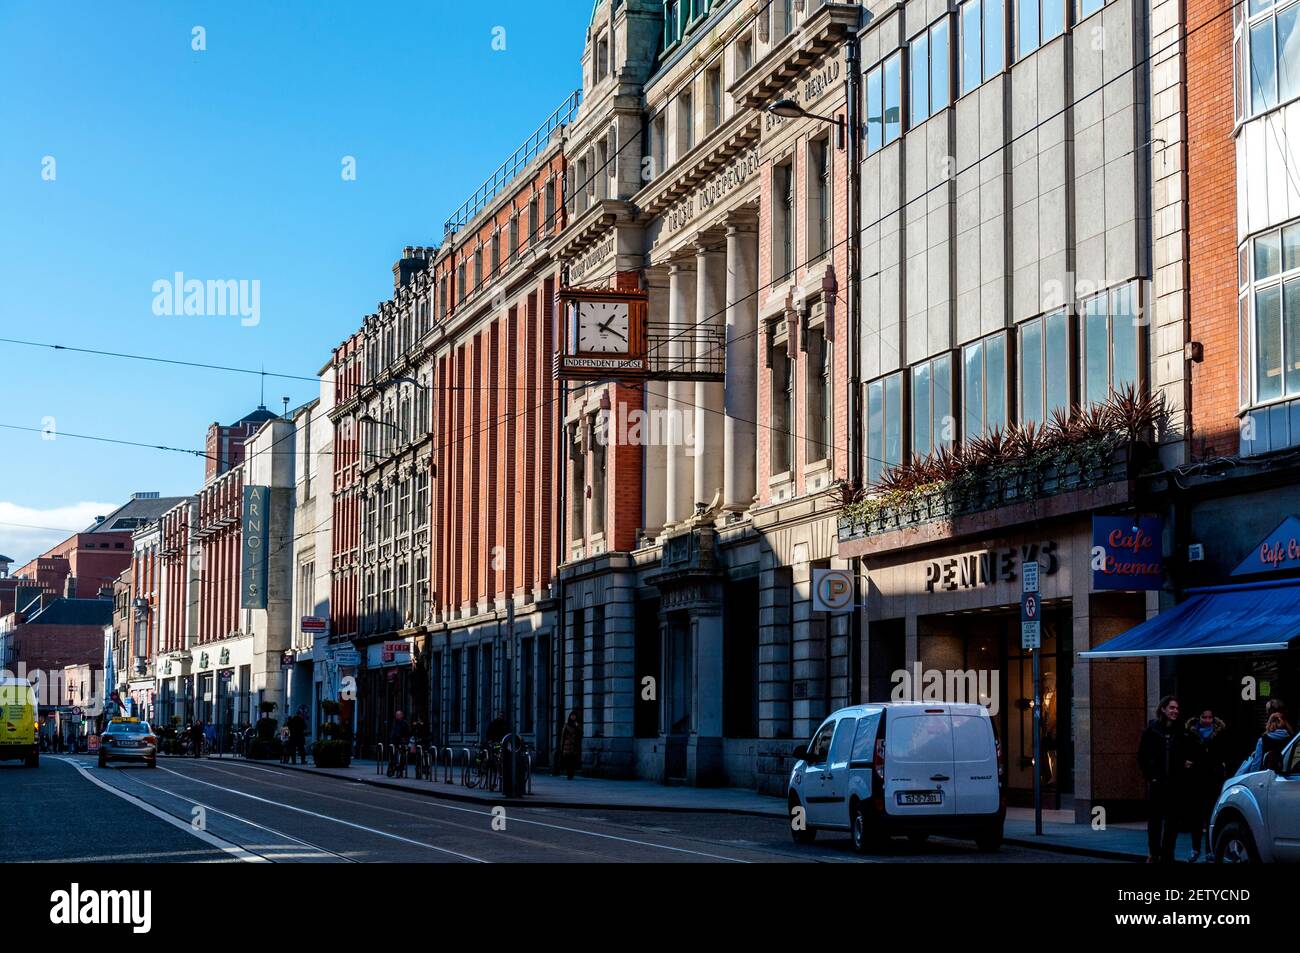 Irish Independent, Sunday Independent, Evening Herald, offices on Middle Abbey Street, Dublin, Ireland Stock Photo